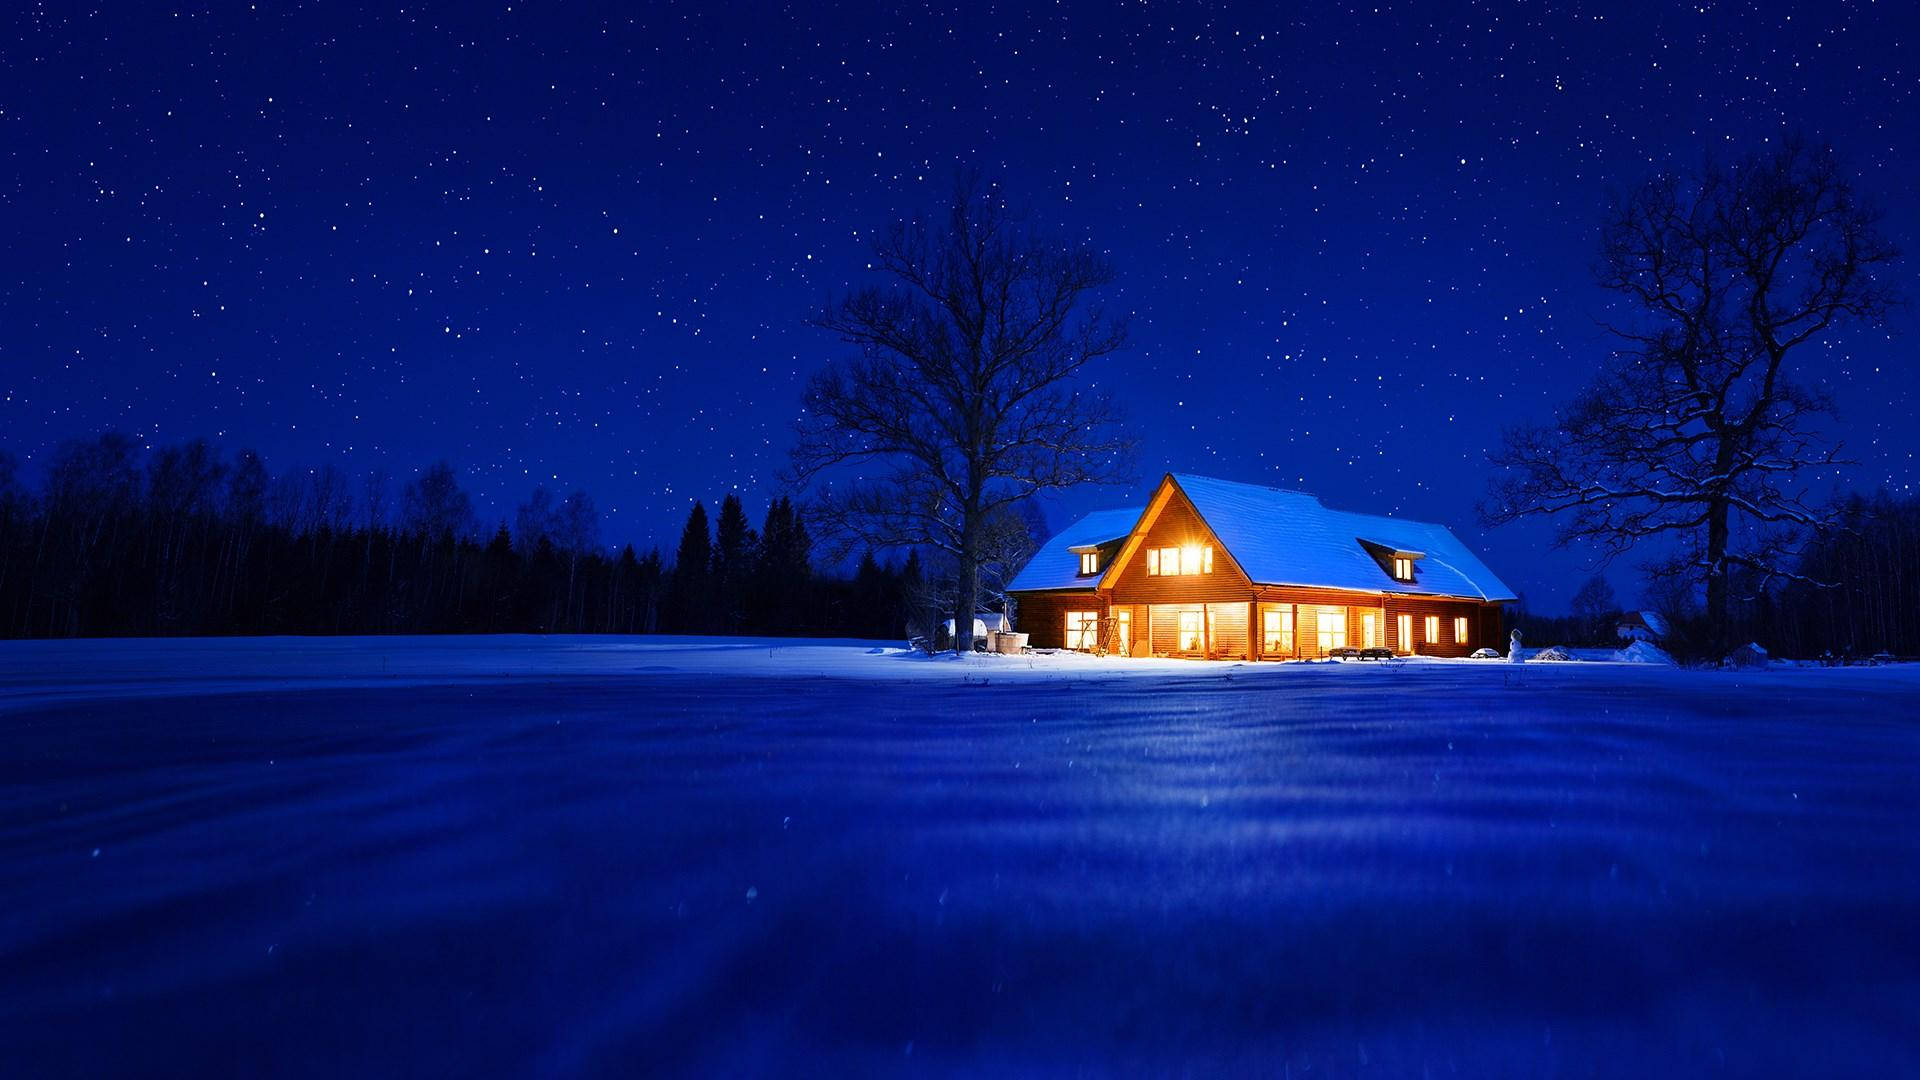 Fondode Pantalla De Windows: Cabaña Invernal En La Noche Estrellada. Fondo de pantalla